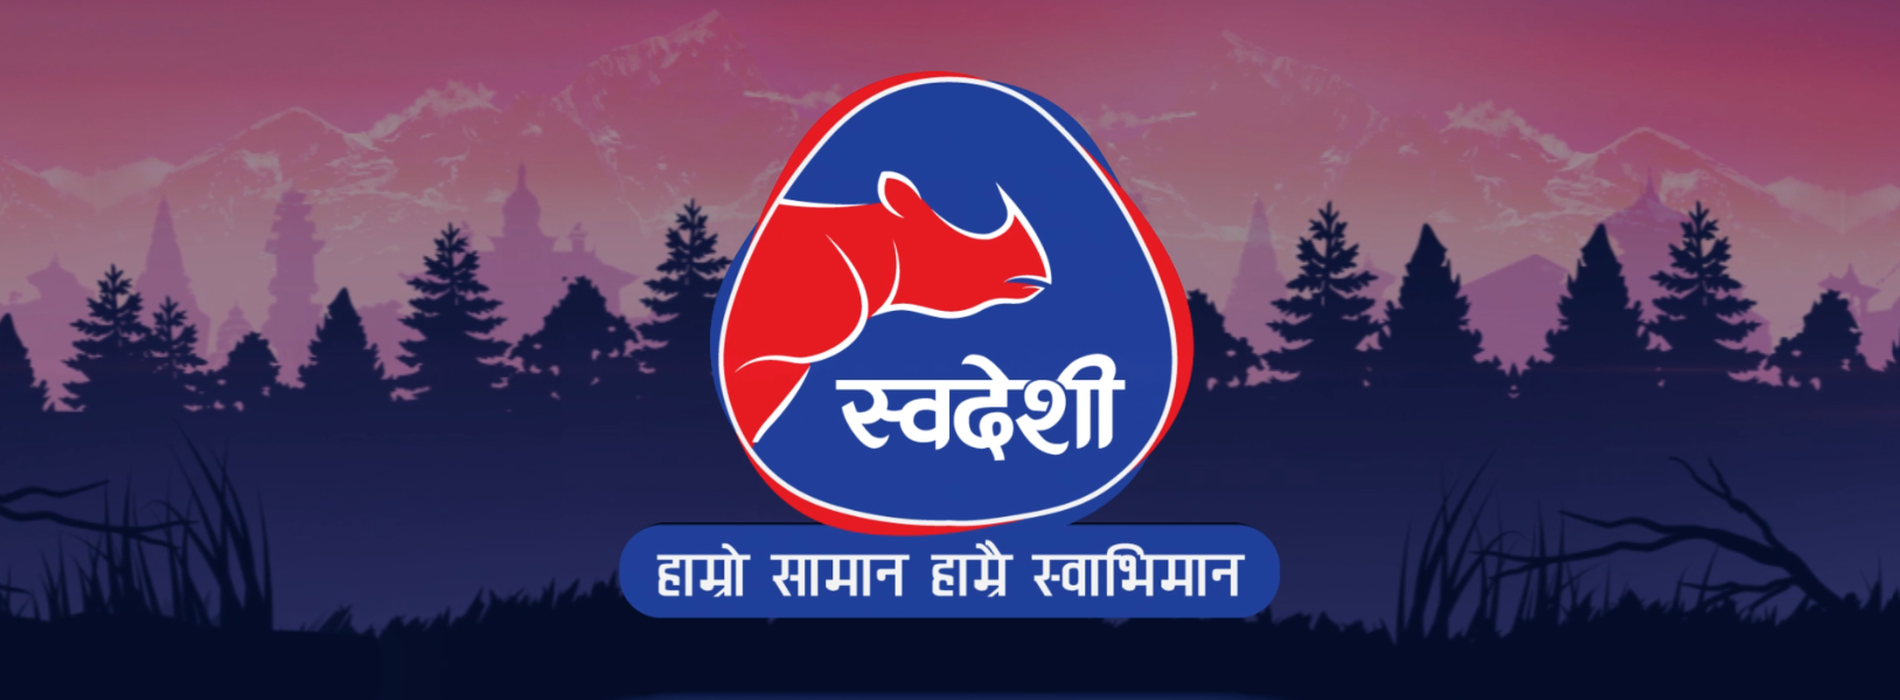 Swadeshi Campaign